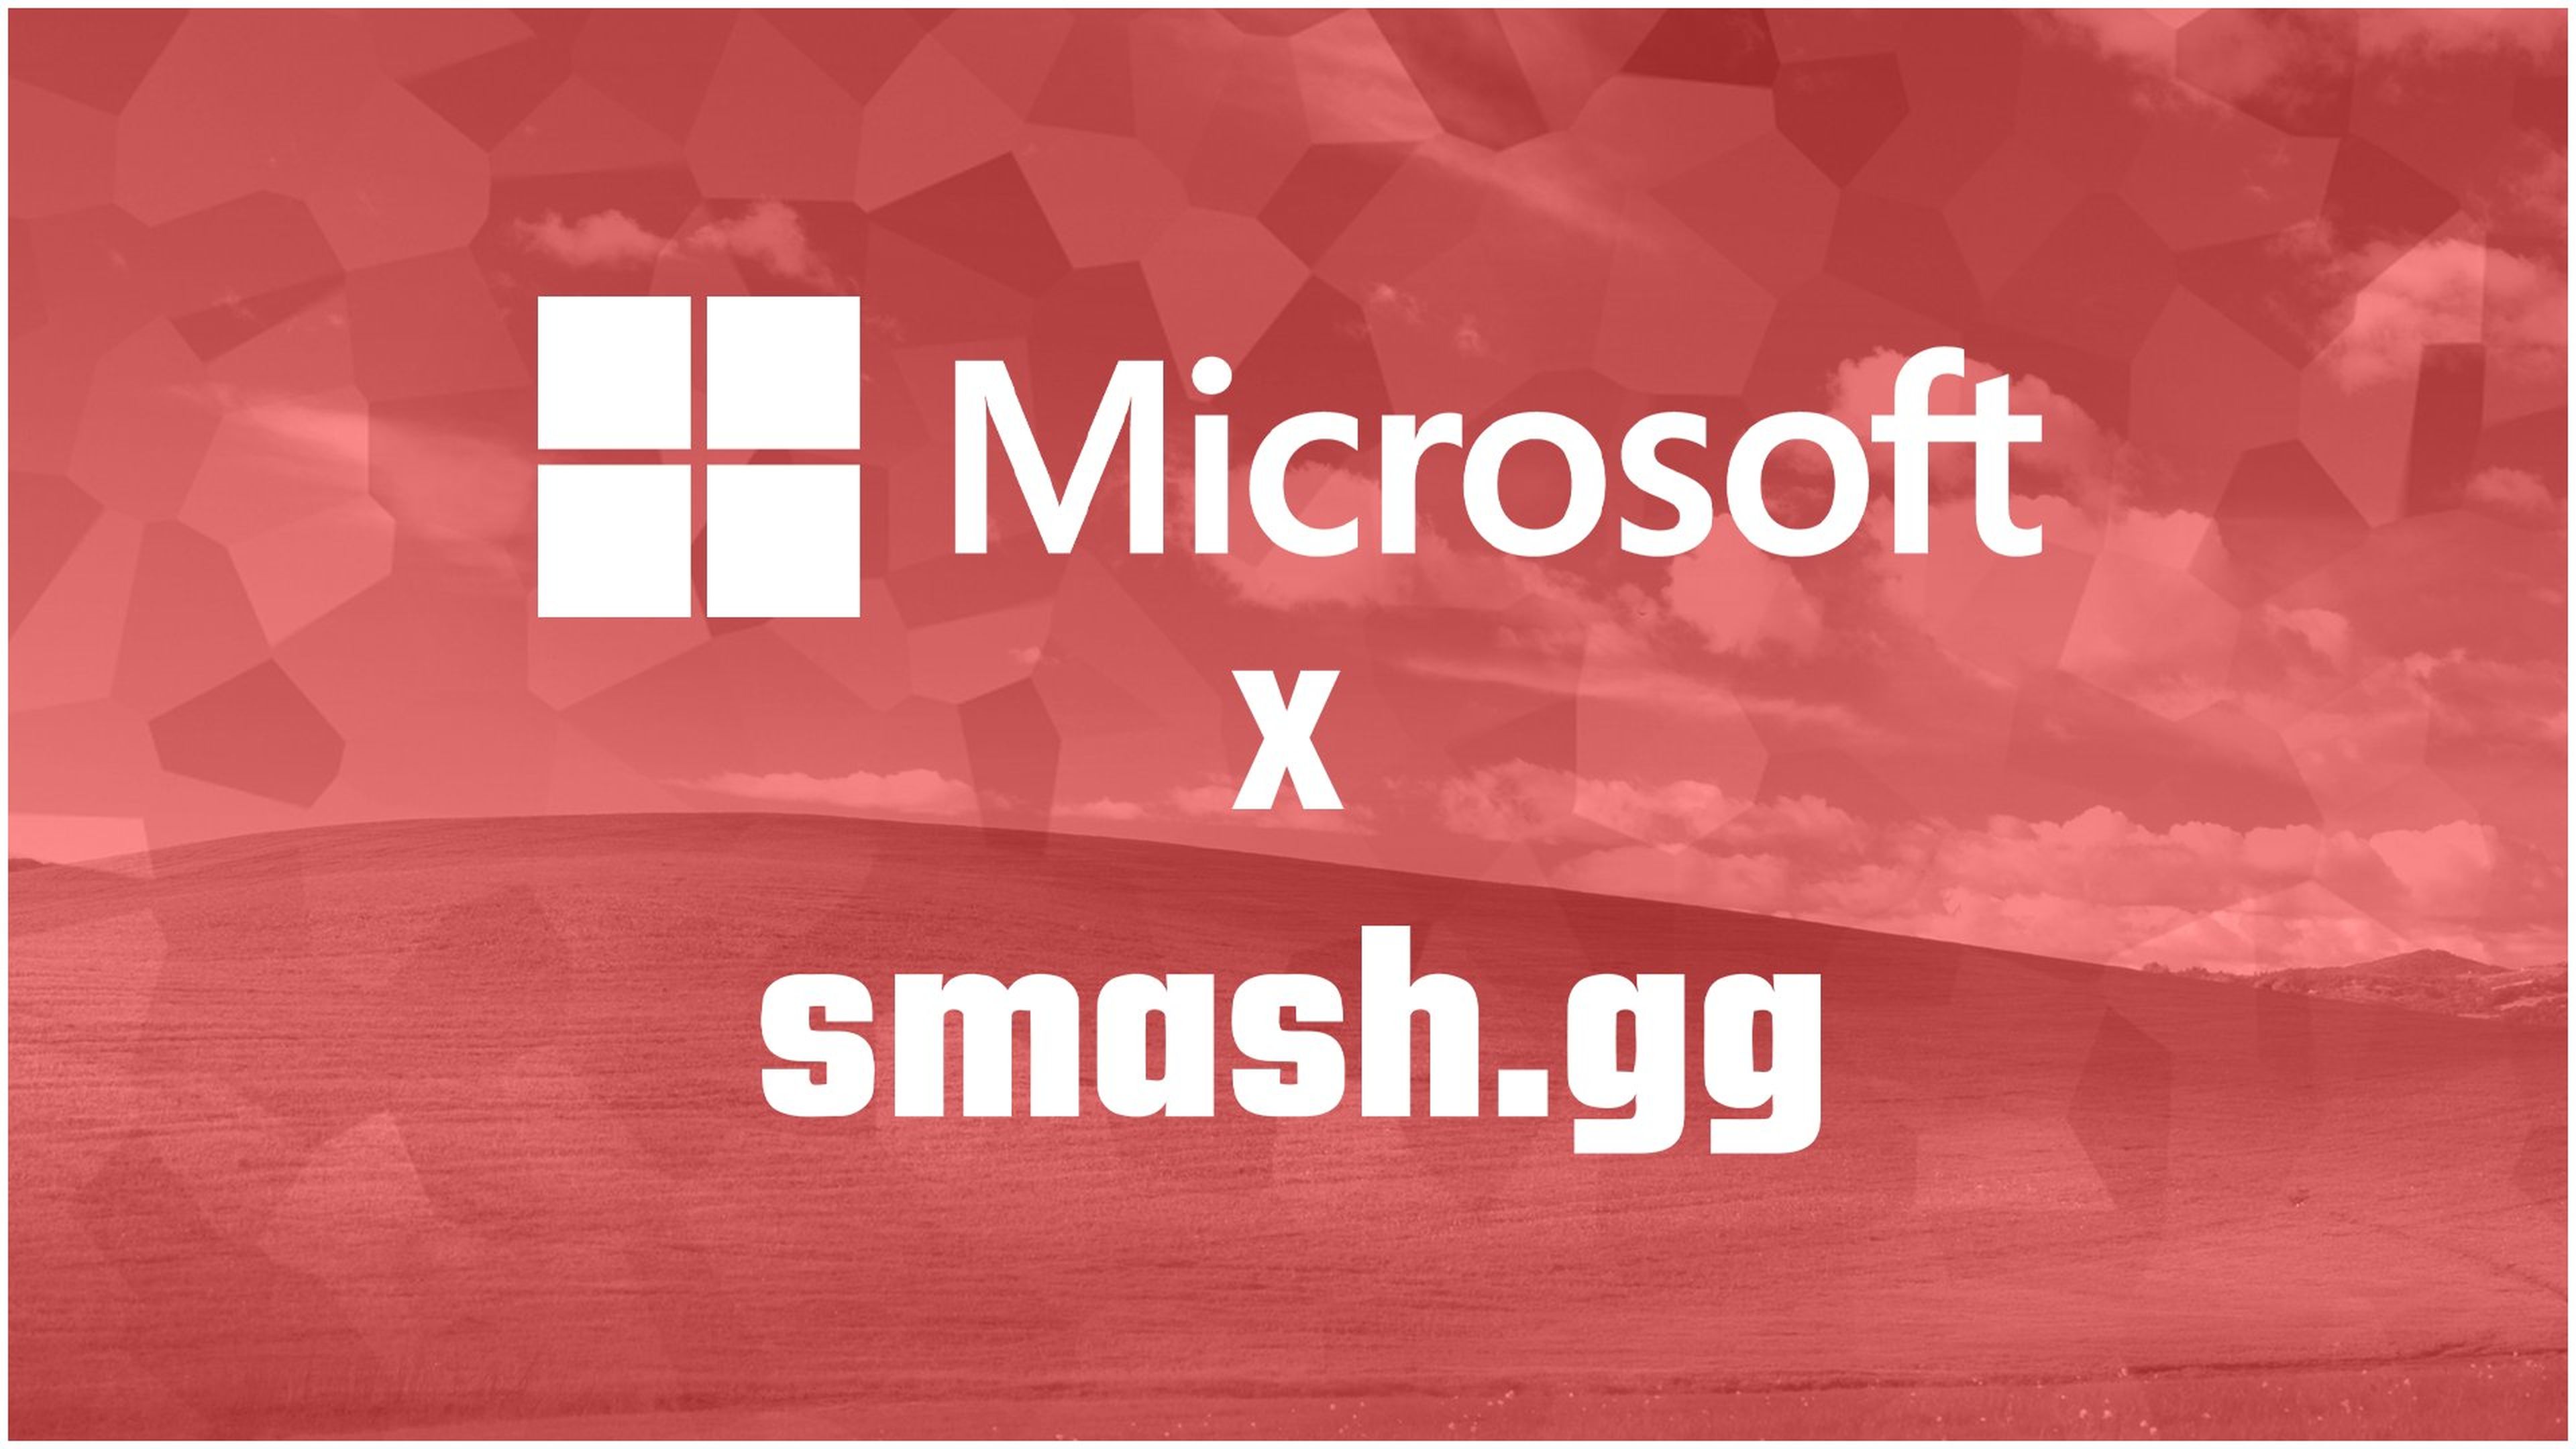 Microsoft Smash.gg eSports